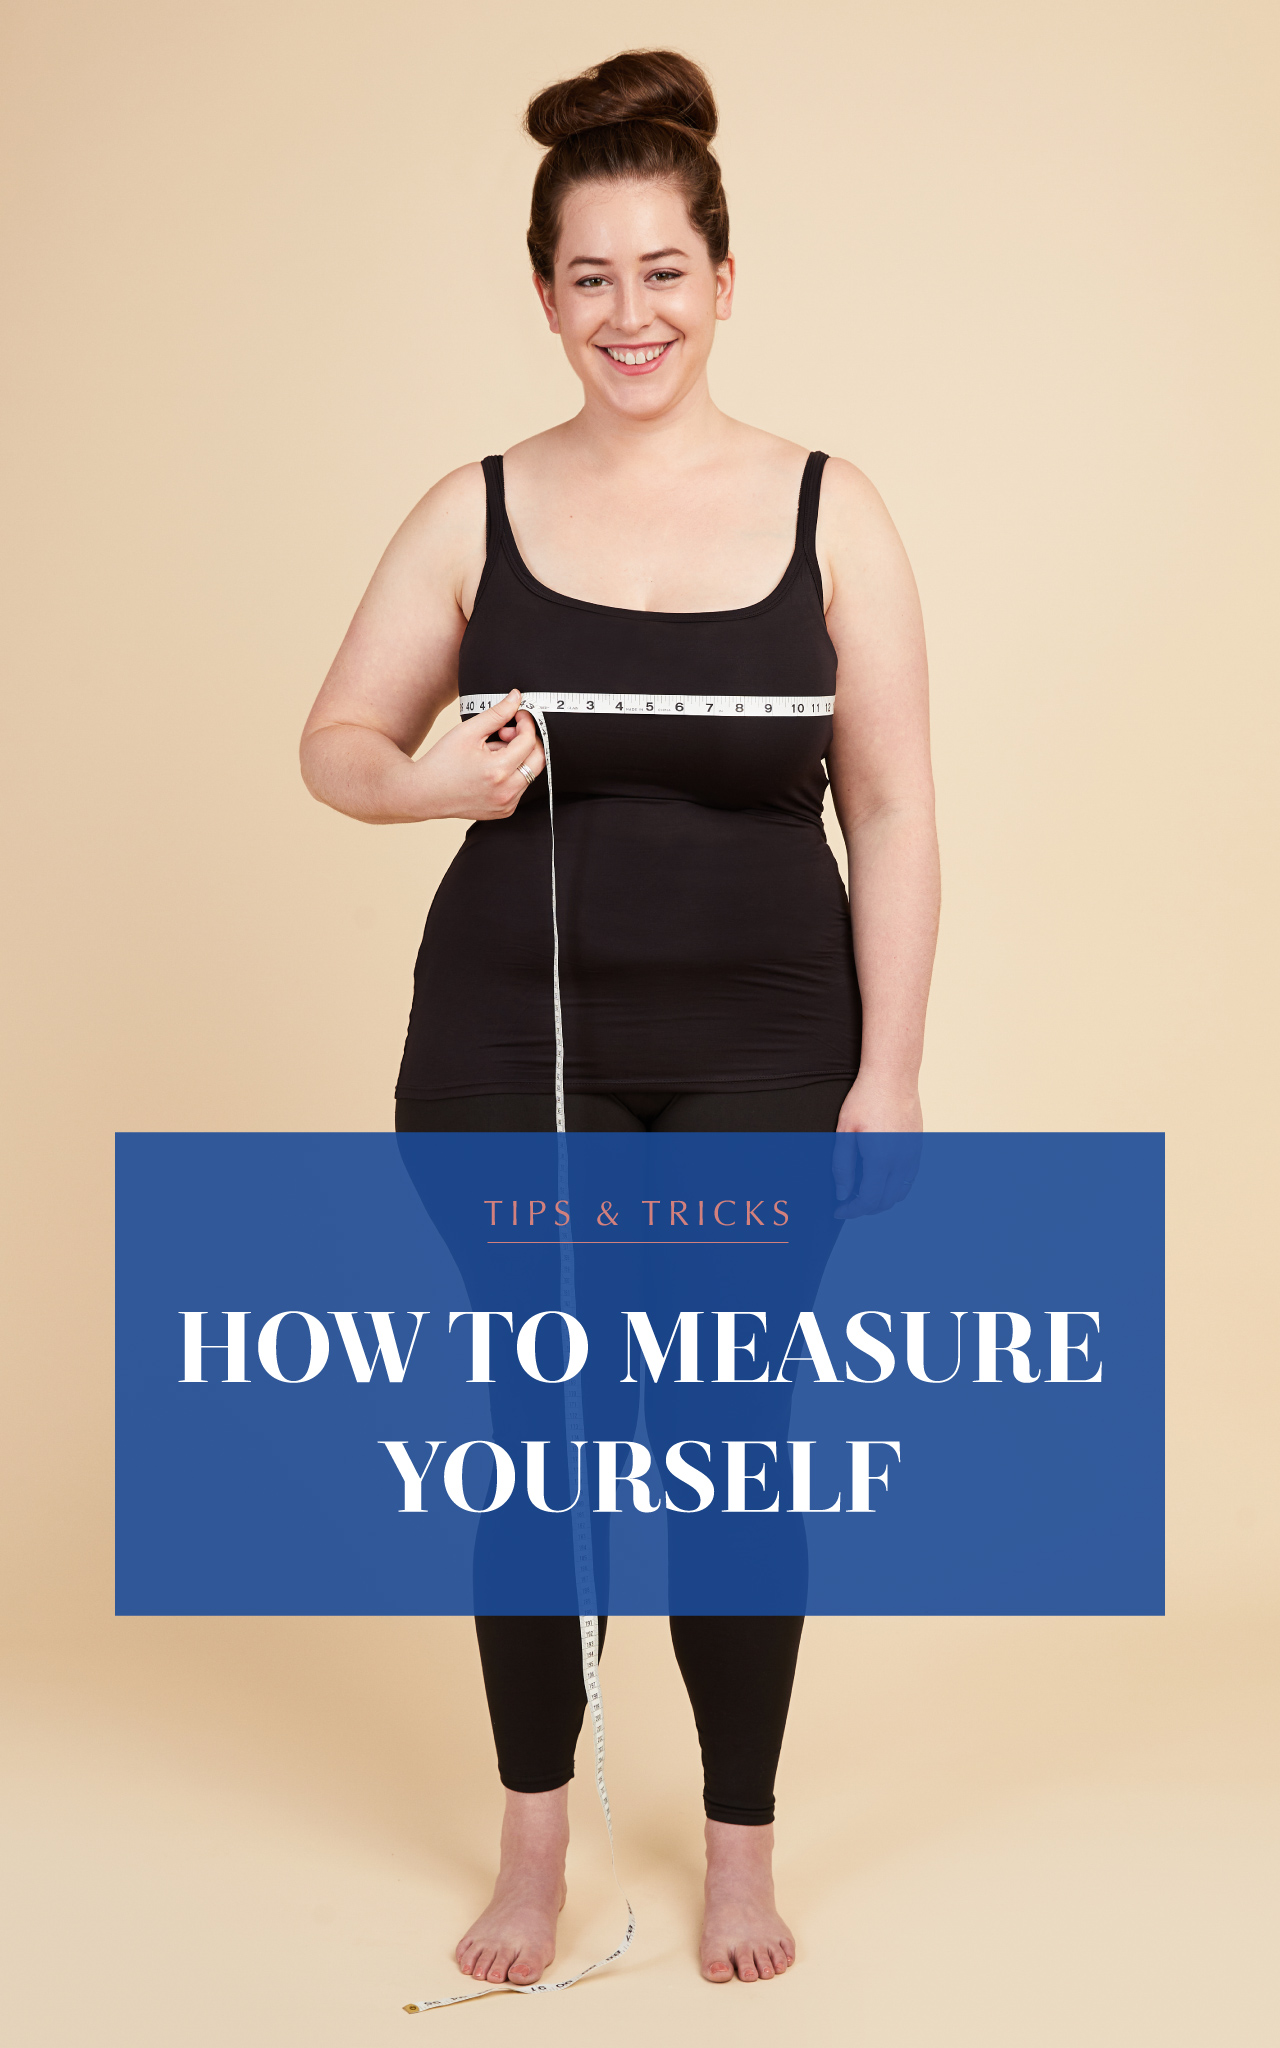 Taking Body Measurements : Start Sewing